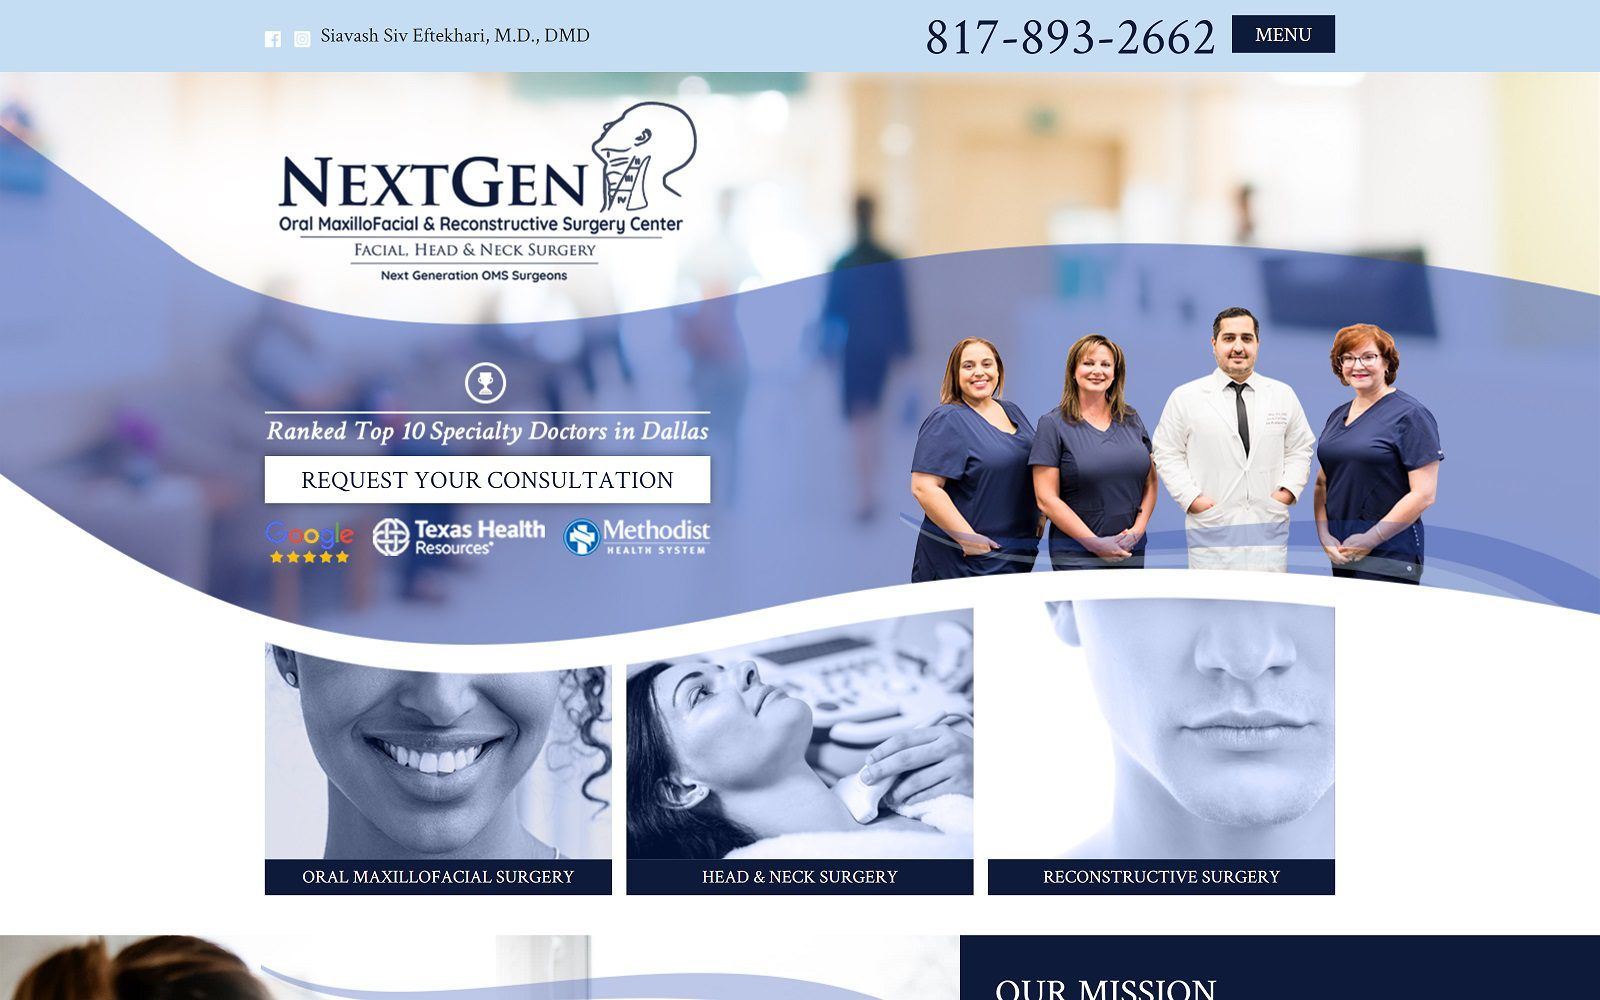 The screenshot of nextgen oral maxillofacial & reconstructive surgery center. Head & neck surgical specialists website